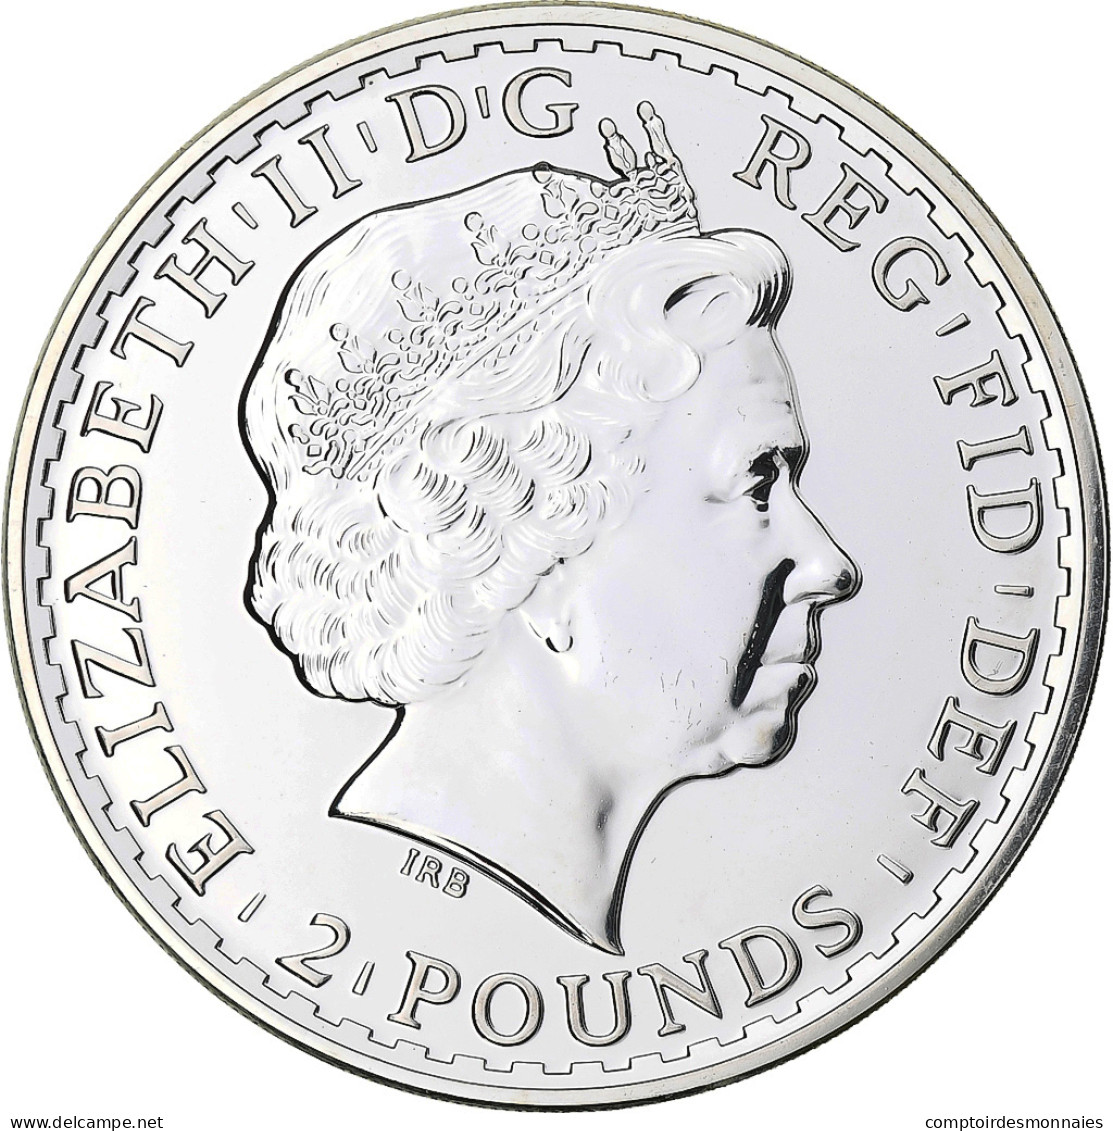 Grande-Bretagne, Elizabeth II, 2 Pounds, 2013, British Royal Mint, Bullion - 2 Pond